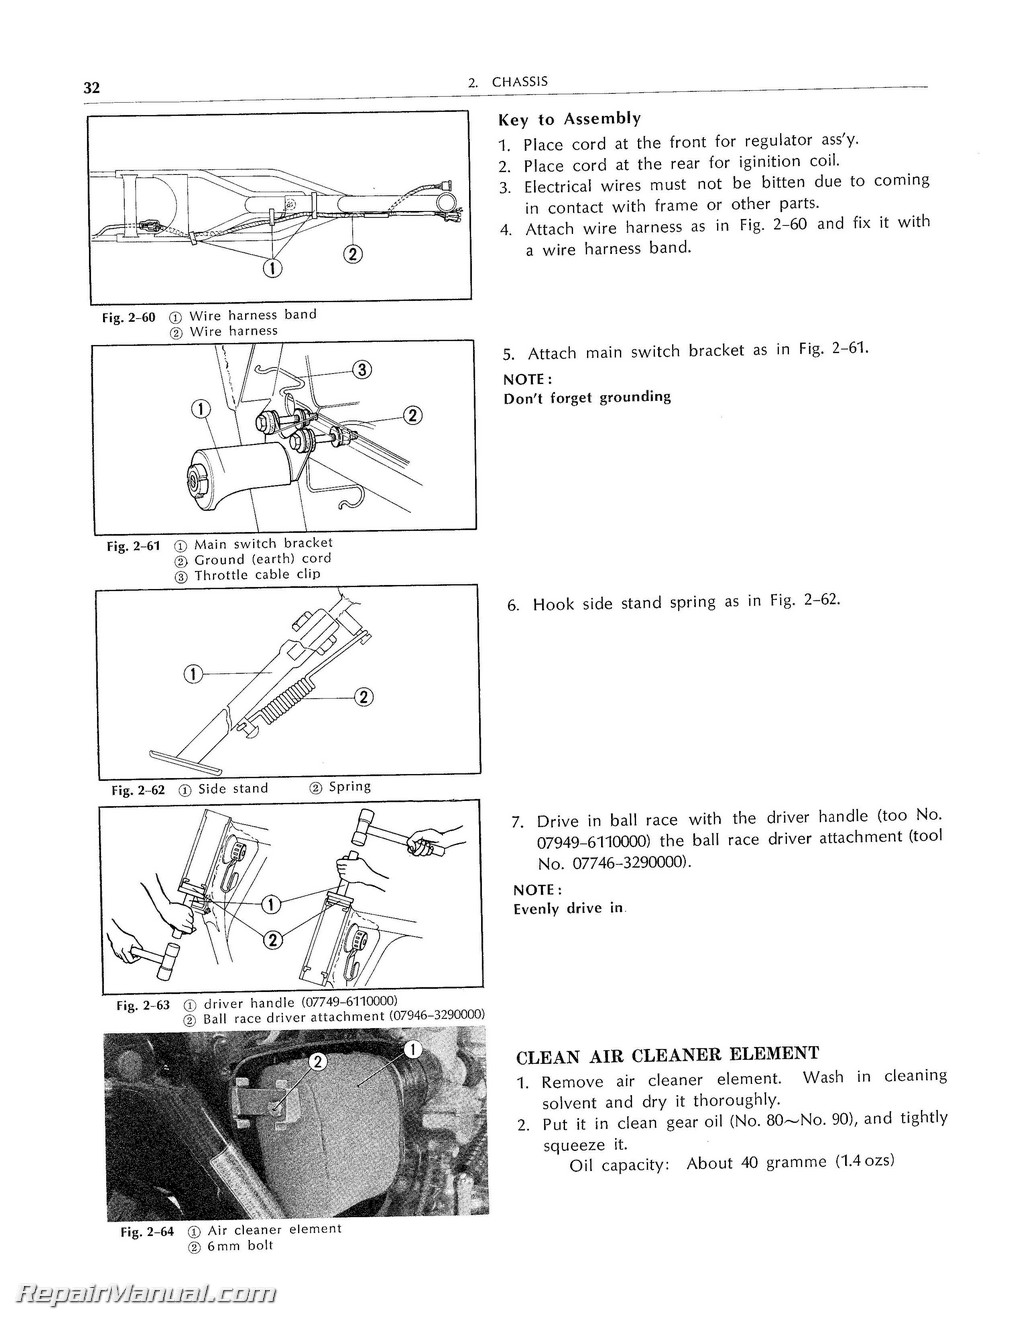 1972 Honda xl250 wiring diagram #4